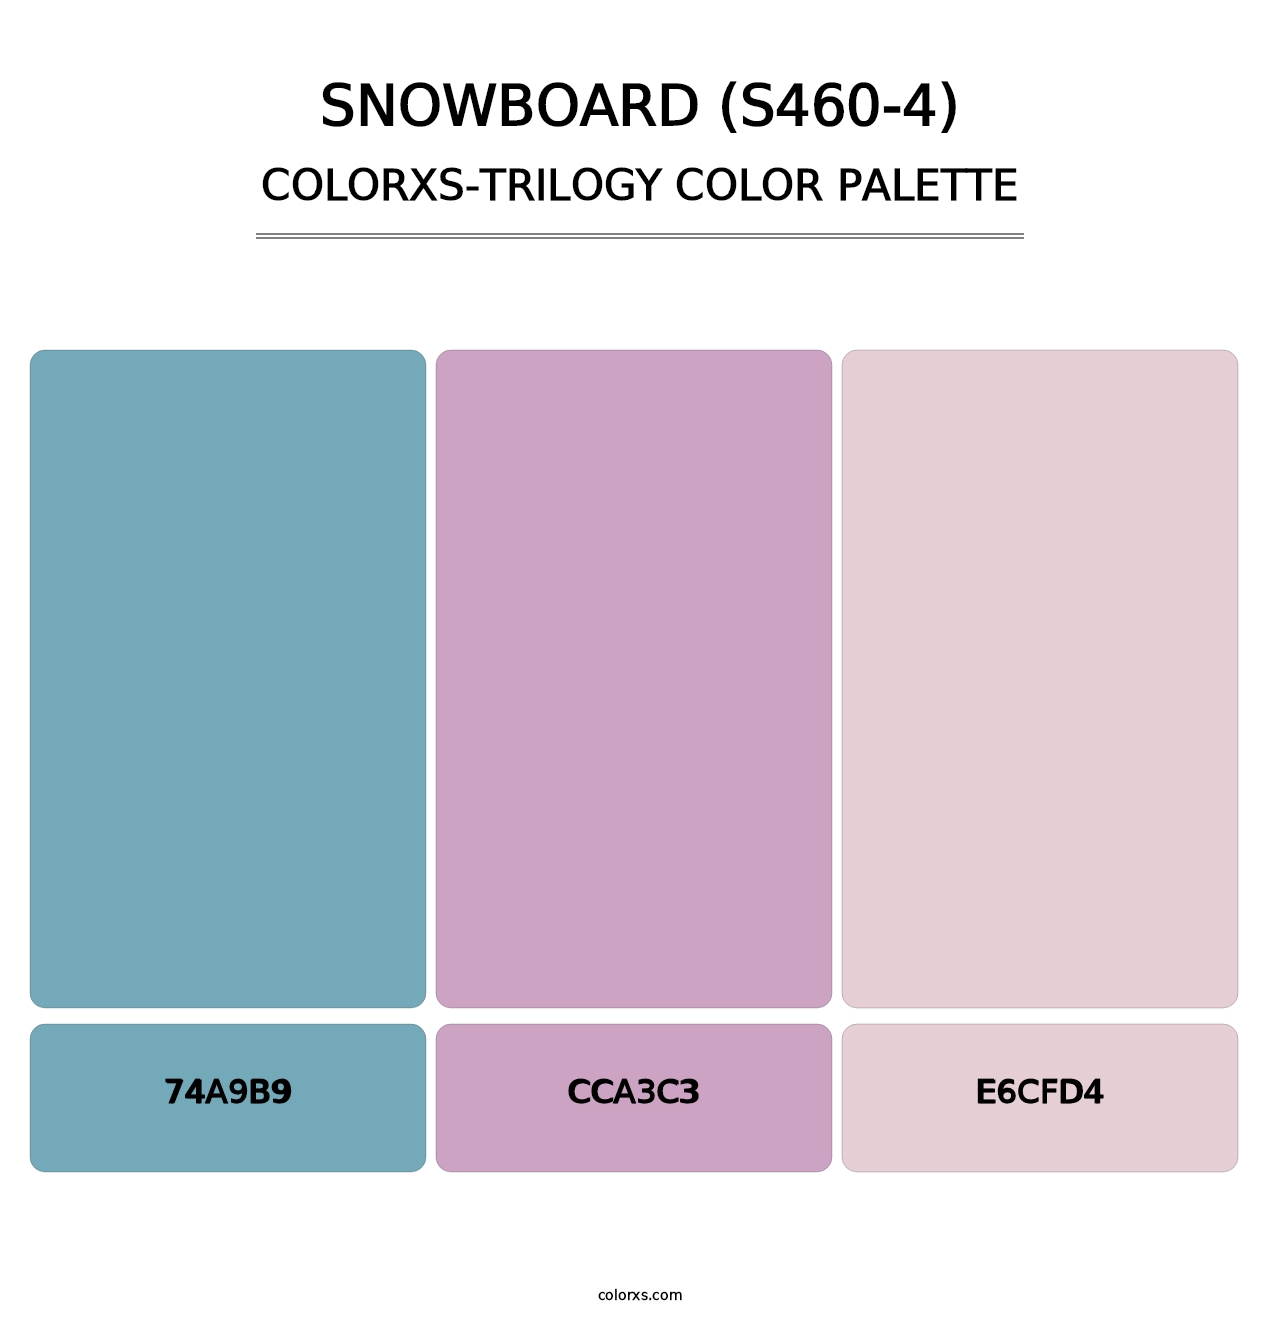 Snowboard (S460-4) - Colorxs Trilogy Palette